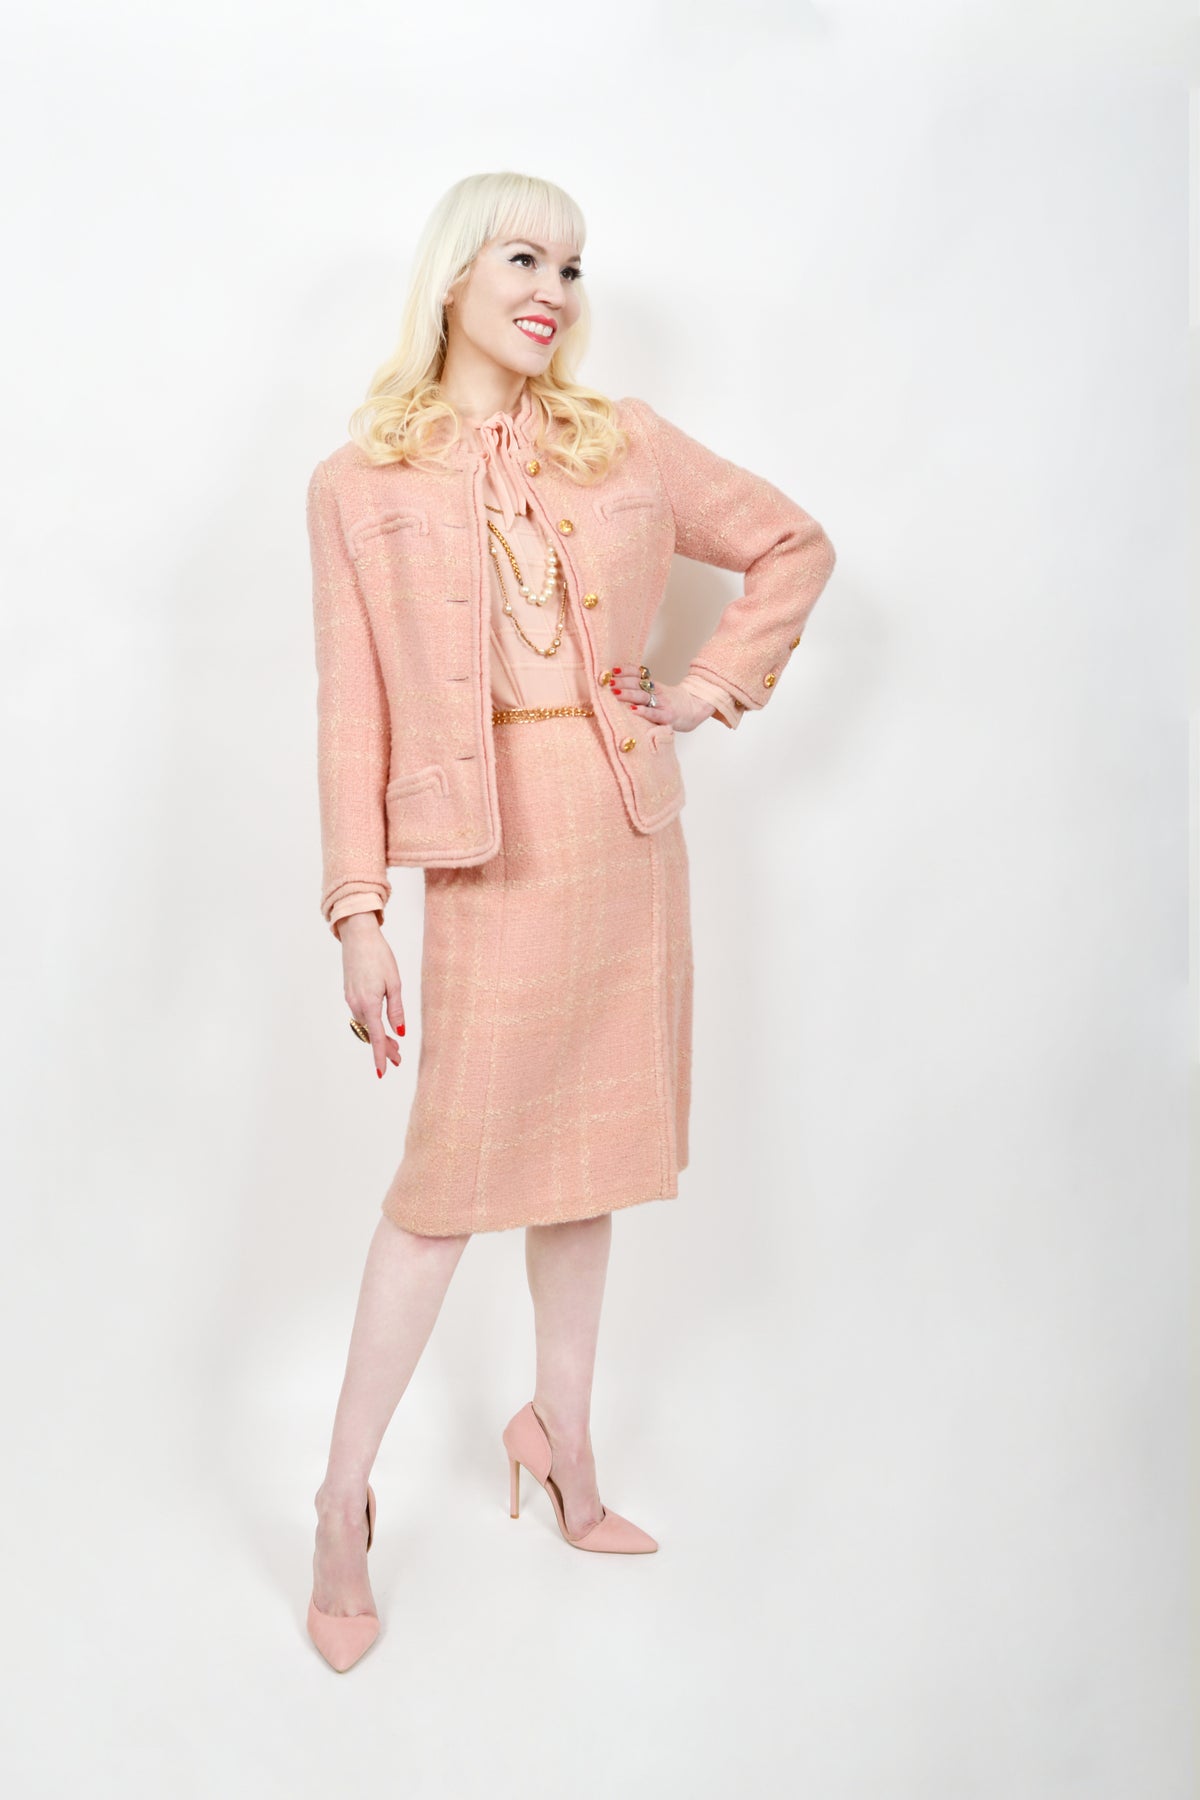 Vogue 2439 Vintage 80s Sewing Pattern Jacket Skirt Blouse Size: 10 | eBay